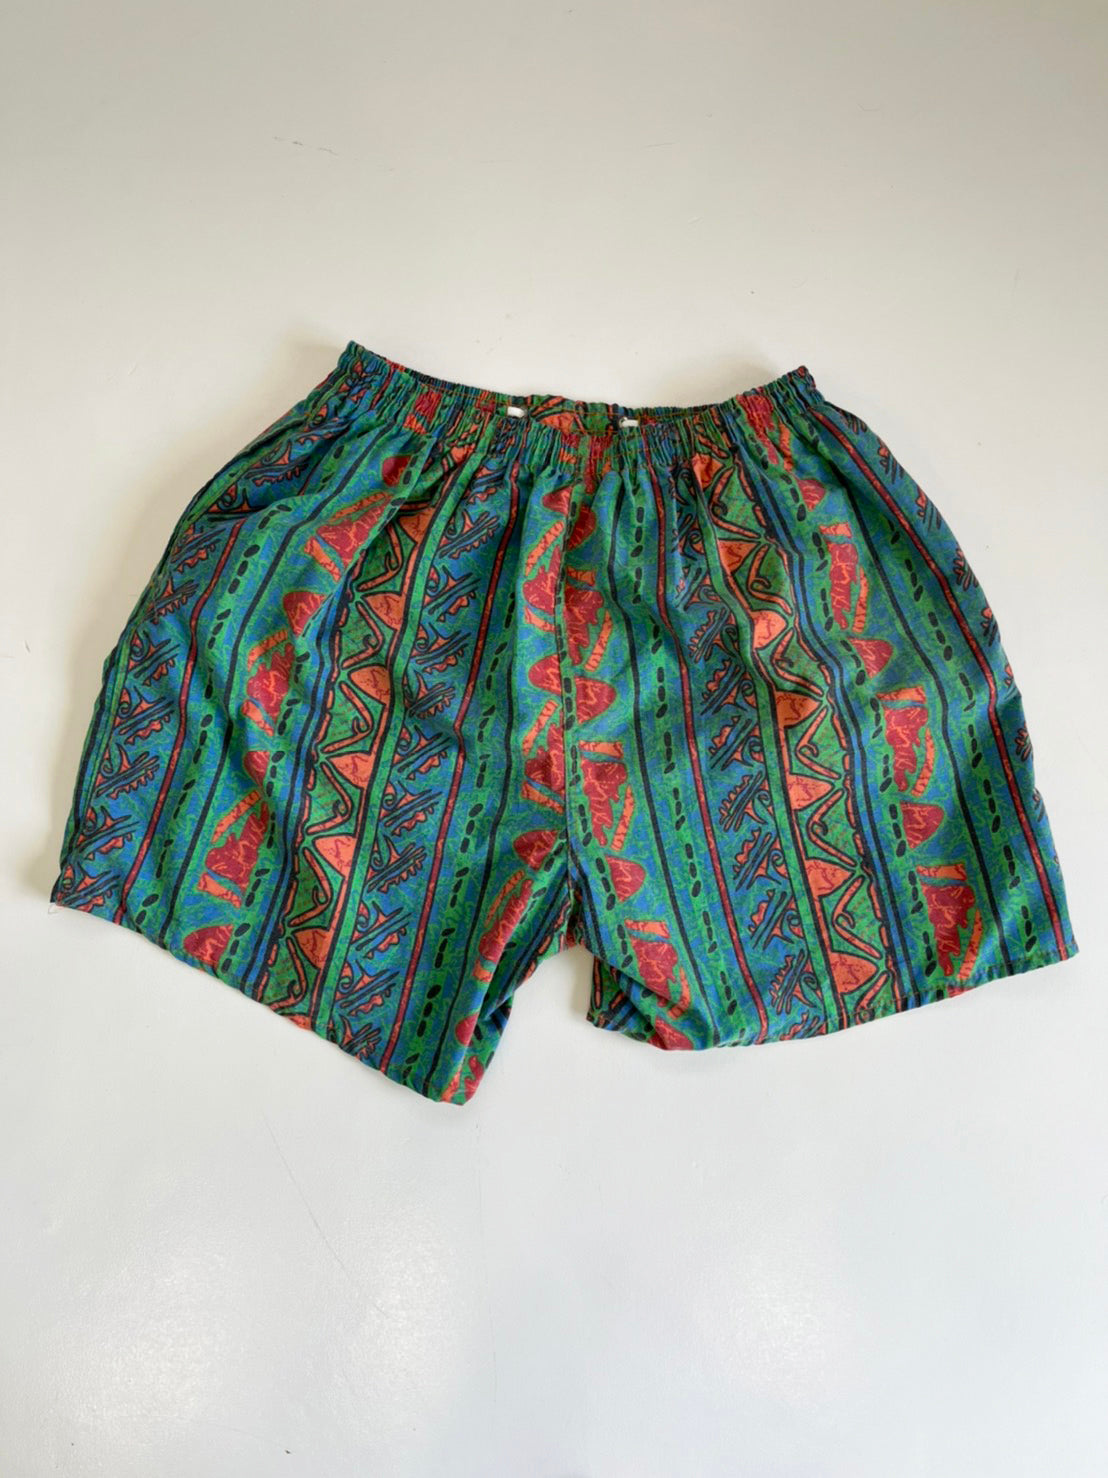 【EURO vintage】FERRY vintage beach shorts   水着 サーフパンツ ビーチショーツ (XXLサイズ）